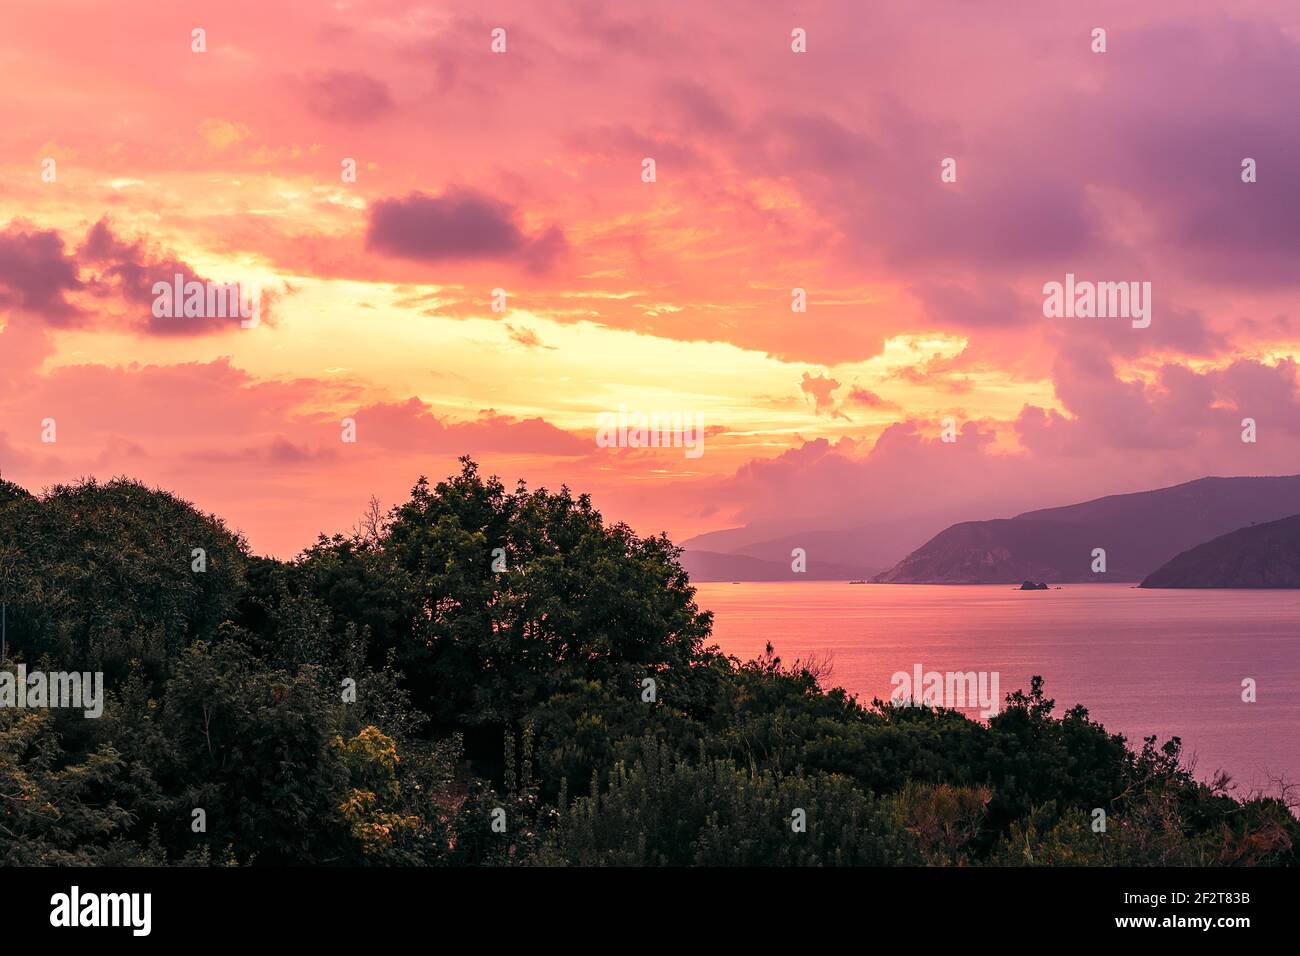 Wunderschöner violetter Sonnenuntergang auf der Insel Elba. Toskana, Italien Stockfoto